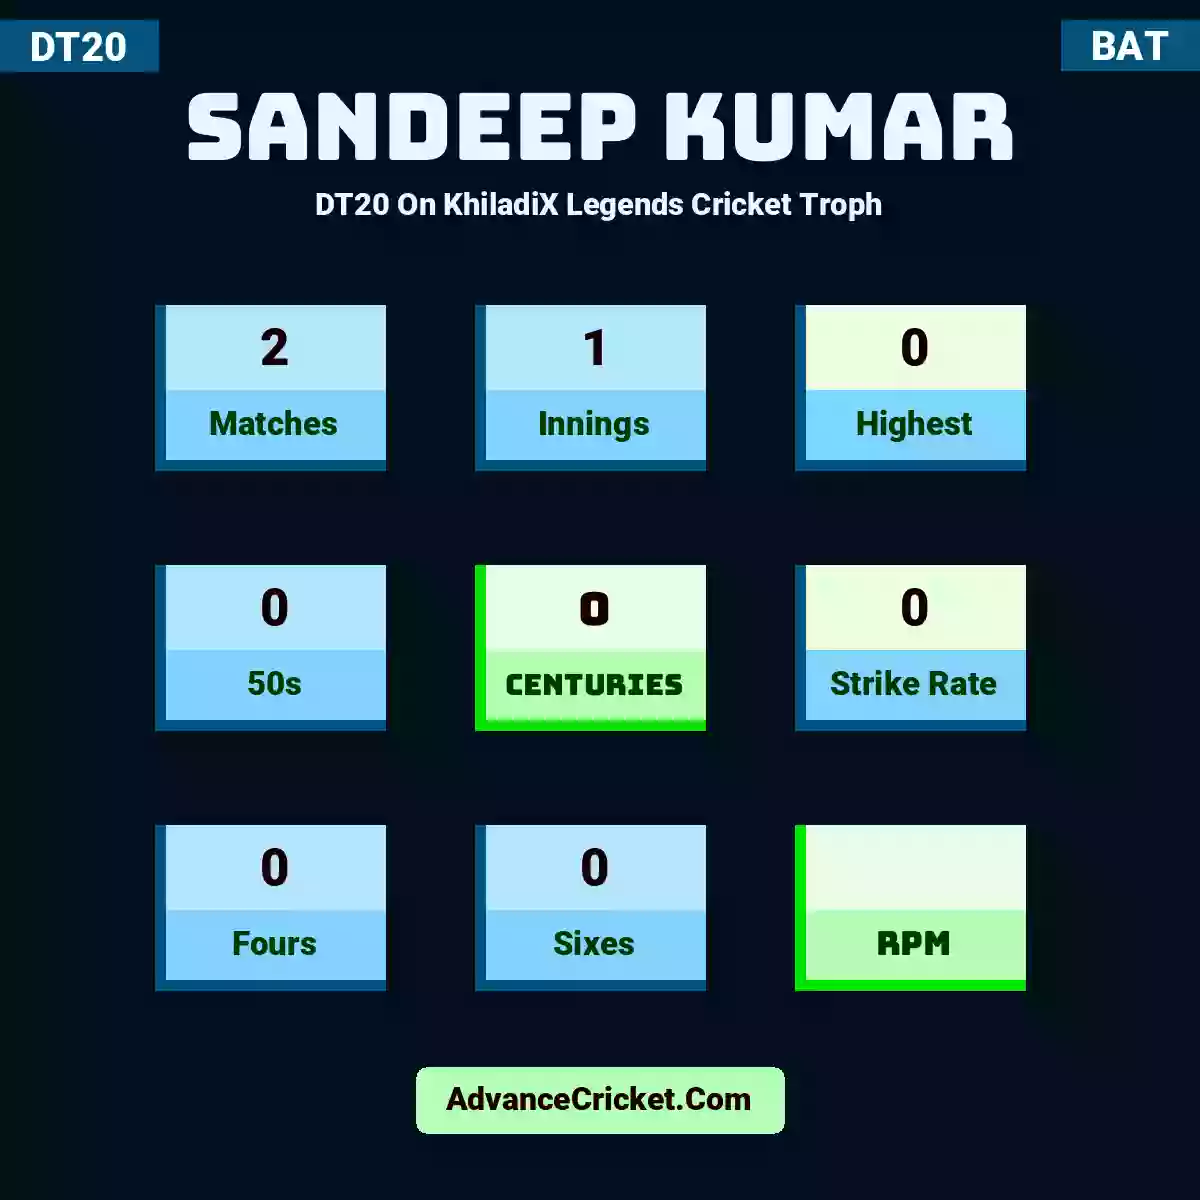 Sandeep Kumar DT20  On KhiladiX Legends Cricket Troph, Sandeep Kumar played 2 matches, scored 0 runs as highest, 0 half-centuries, and 0 centuries, with a strike rate of 0. S.Kumar hit 0 fours and 0 sixes.